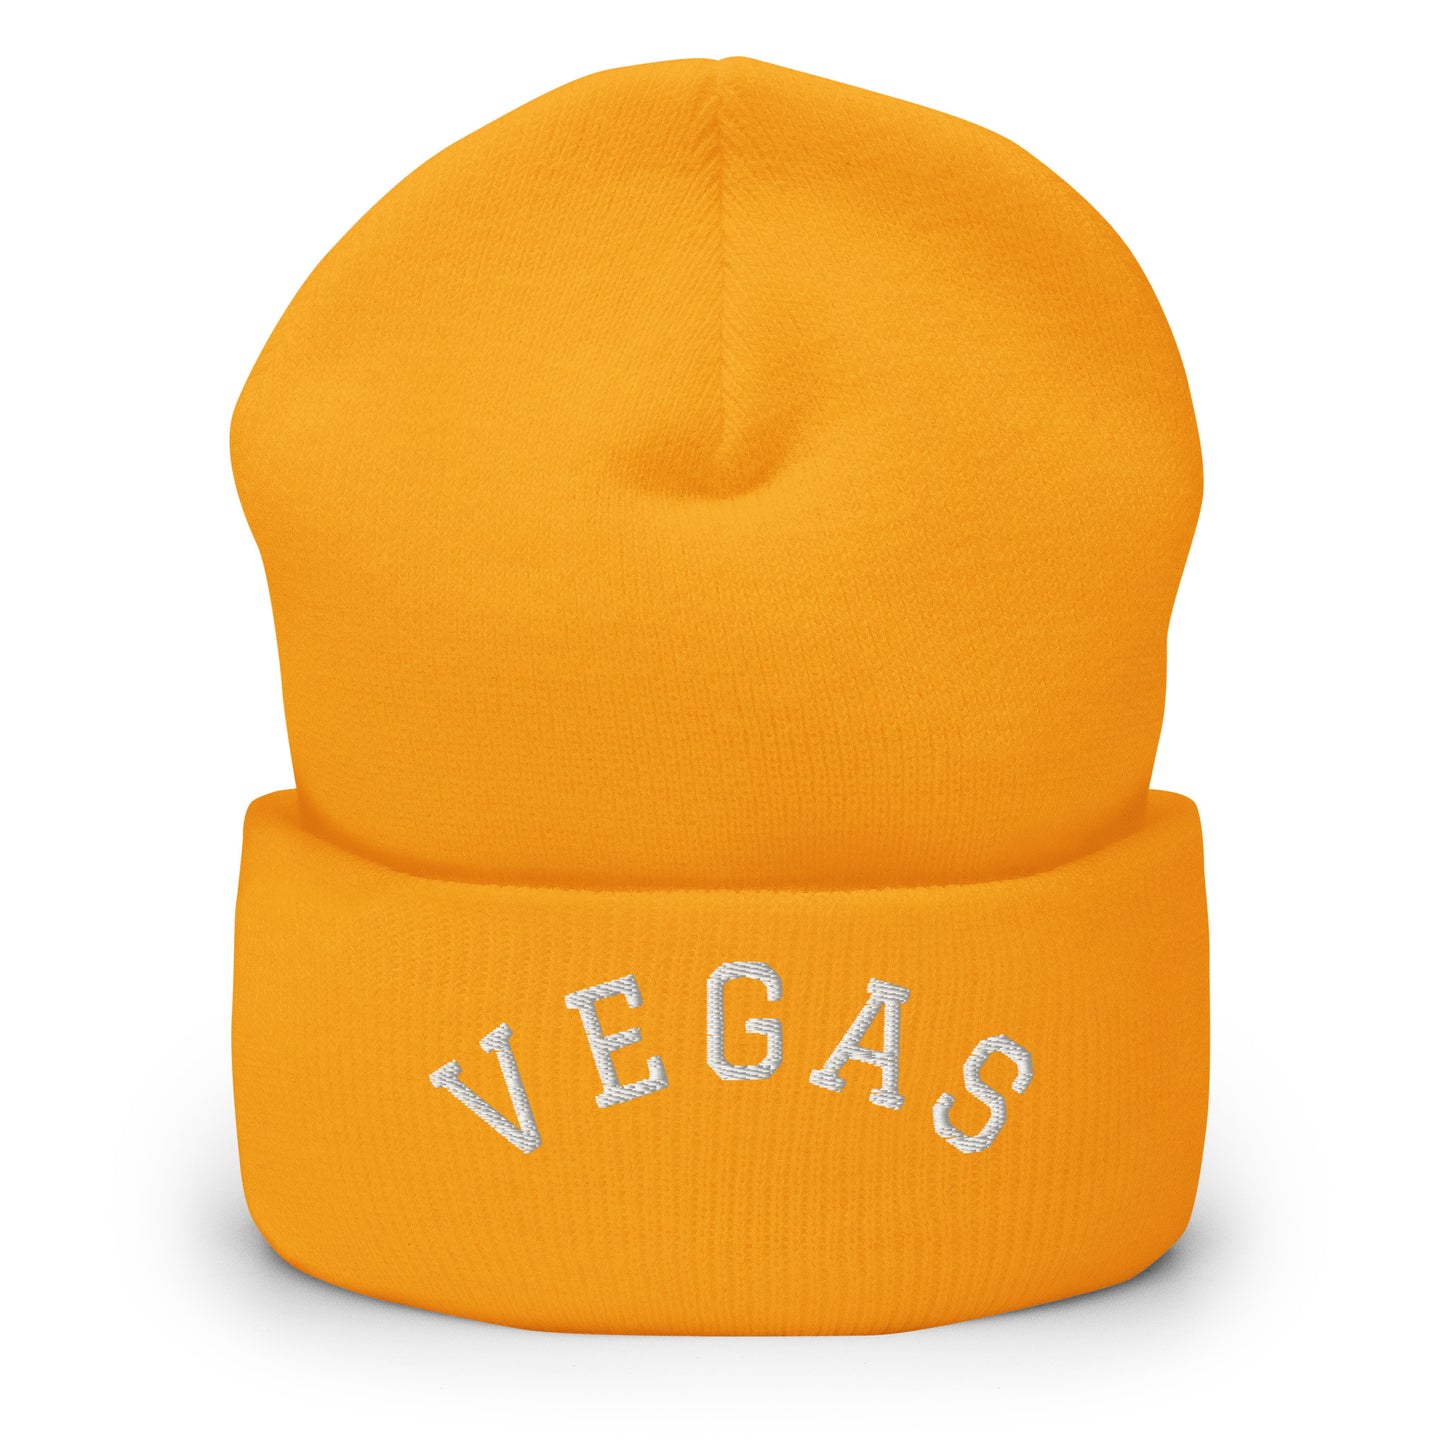 Las Vegas Arch Cuffed Beanie Hat